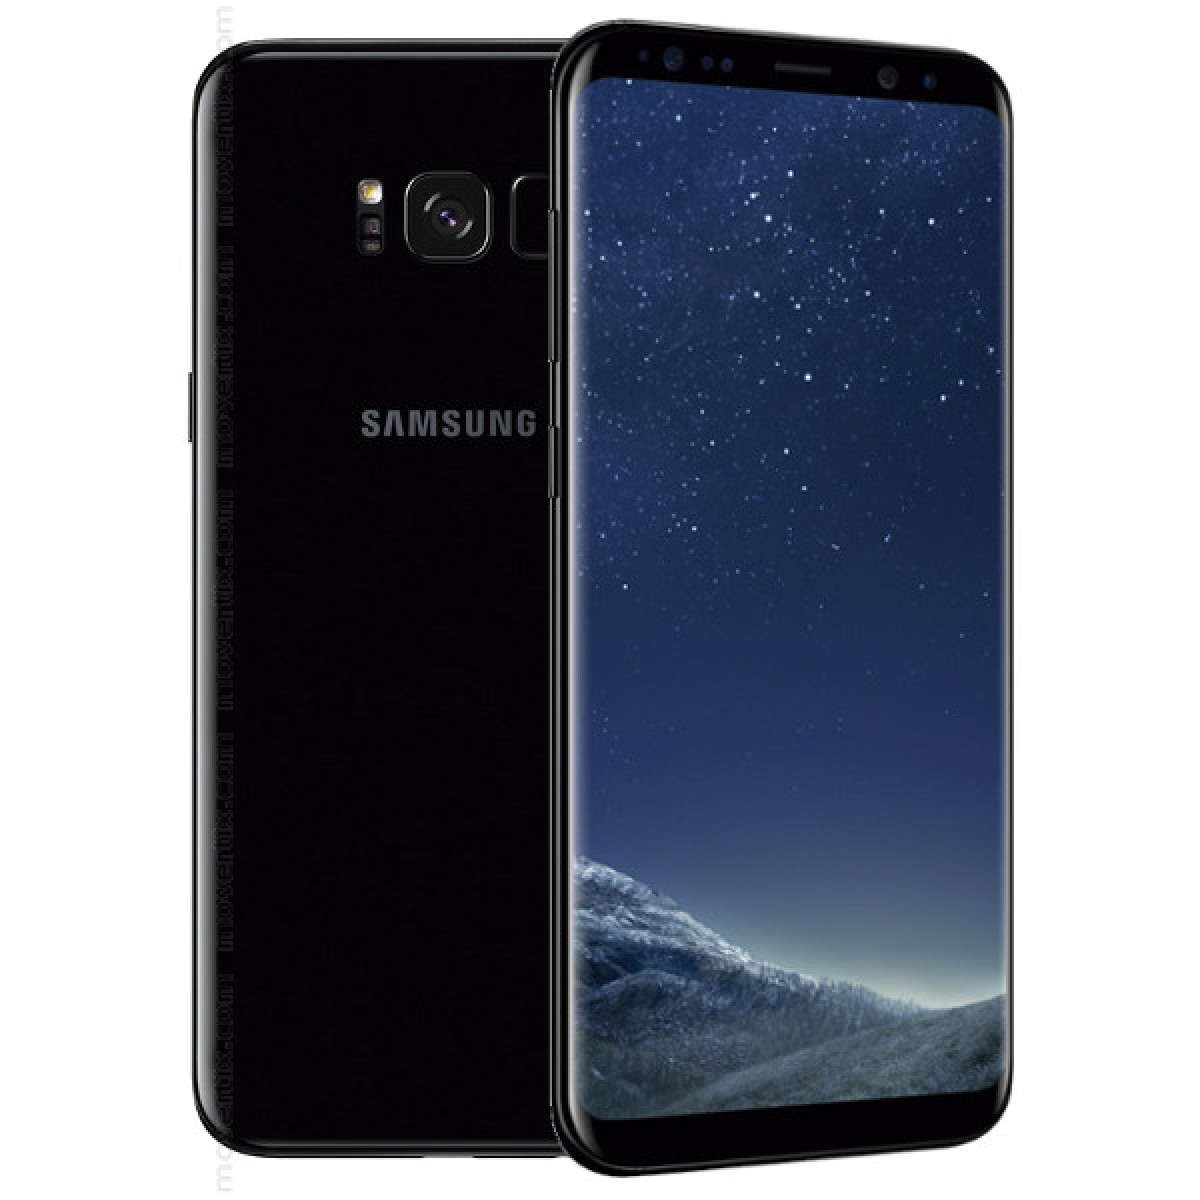 Samsung Galaxy S8 Black - SM-G950F (8806088704616) | Movertix Mobile